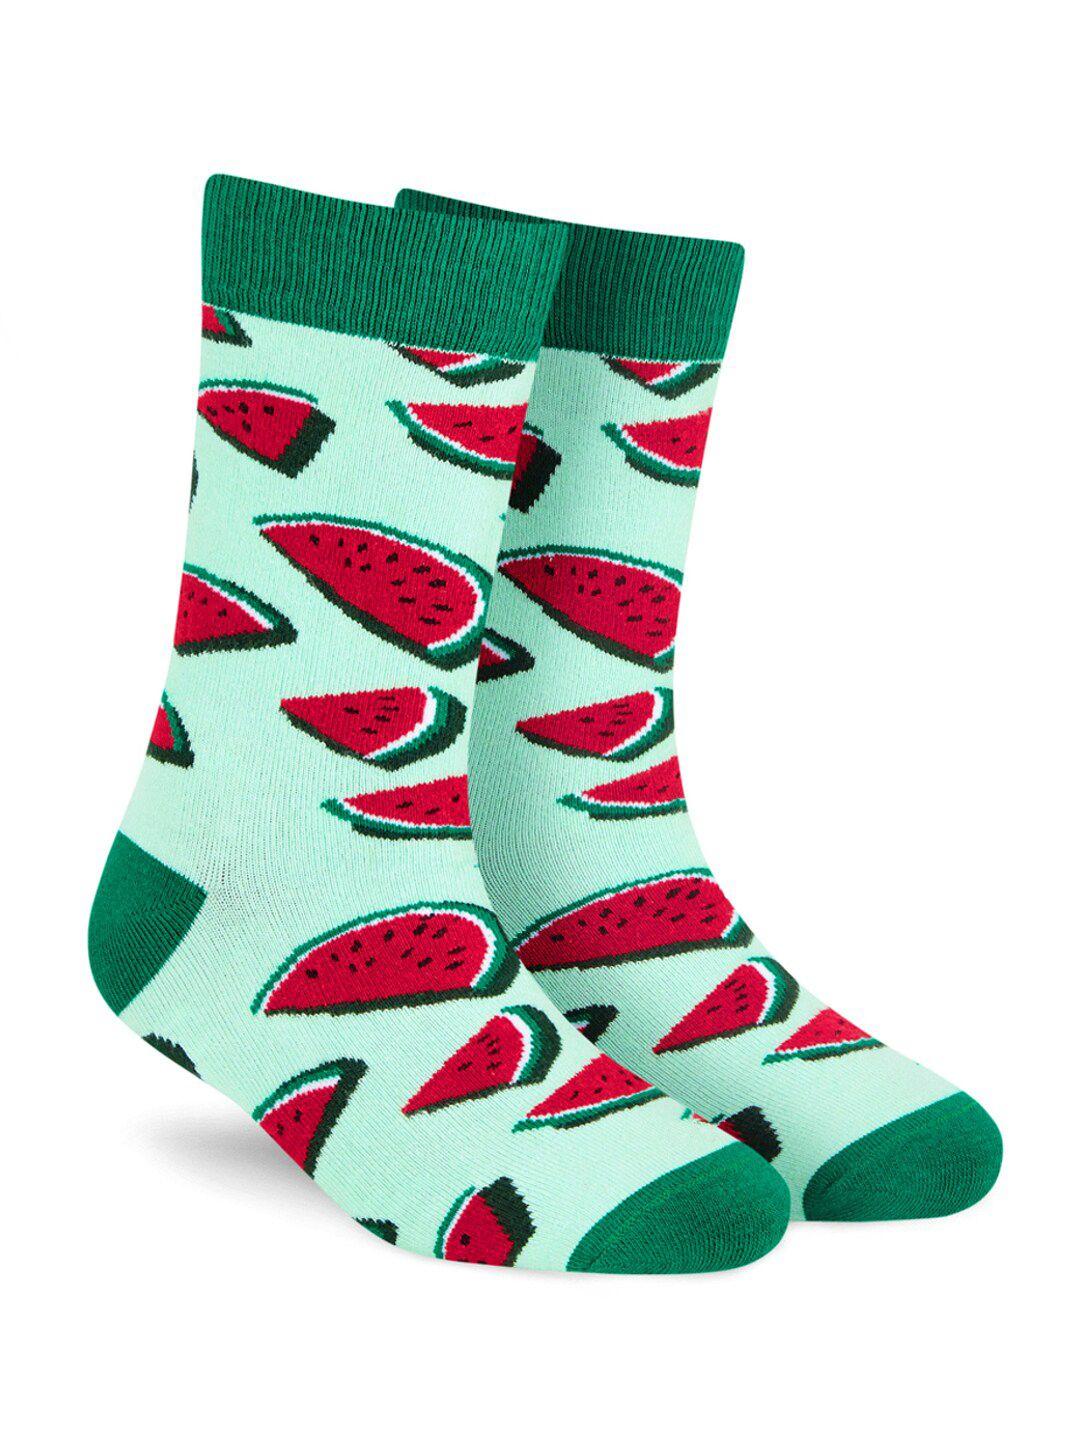 dynamocks unisex green & red patterned calf-length socks